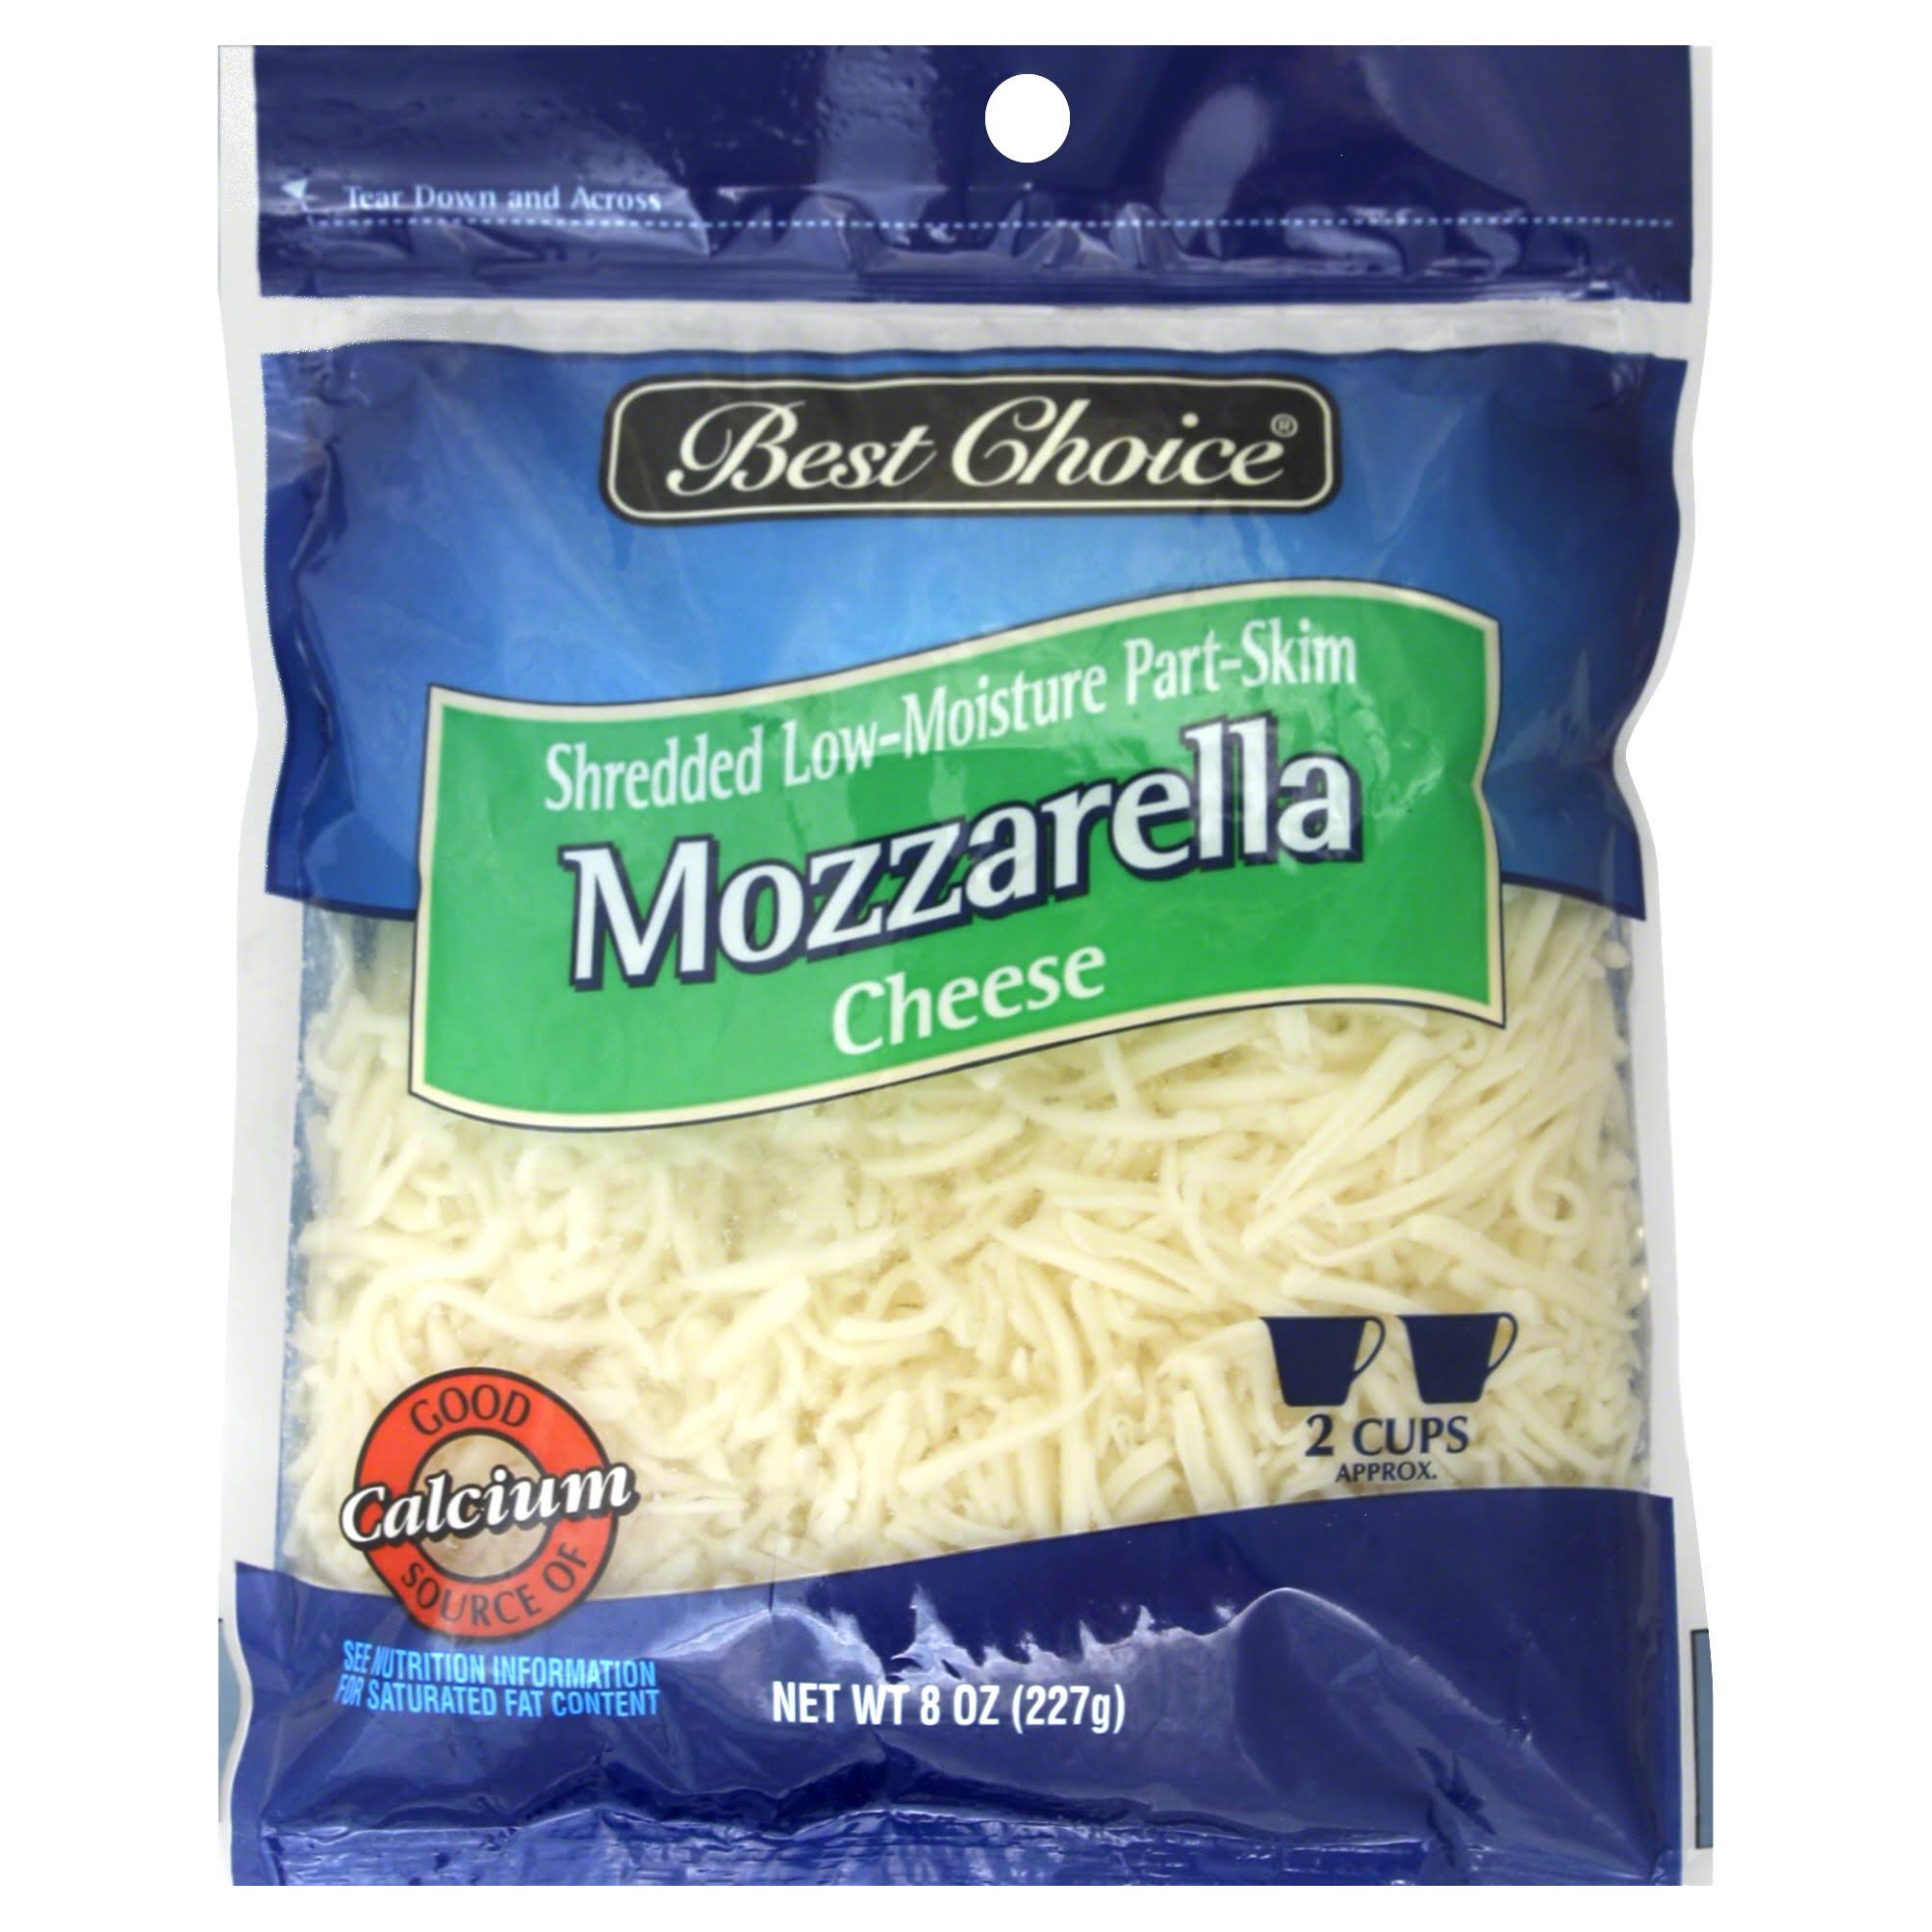 Best Choice Shredded Cheese, Low-Moisture Part-Skim Mozzarella - 8 oz